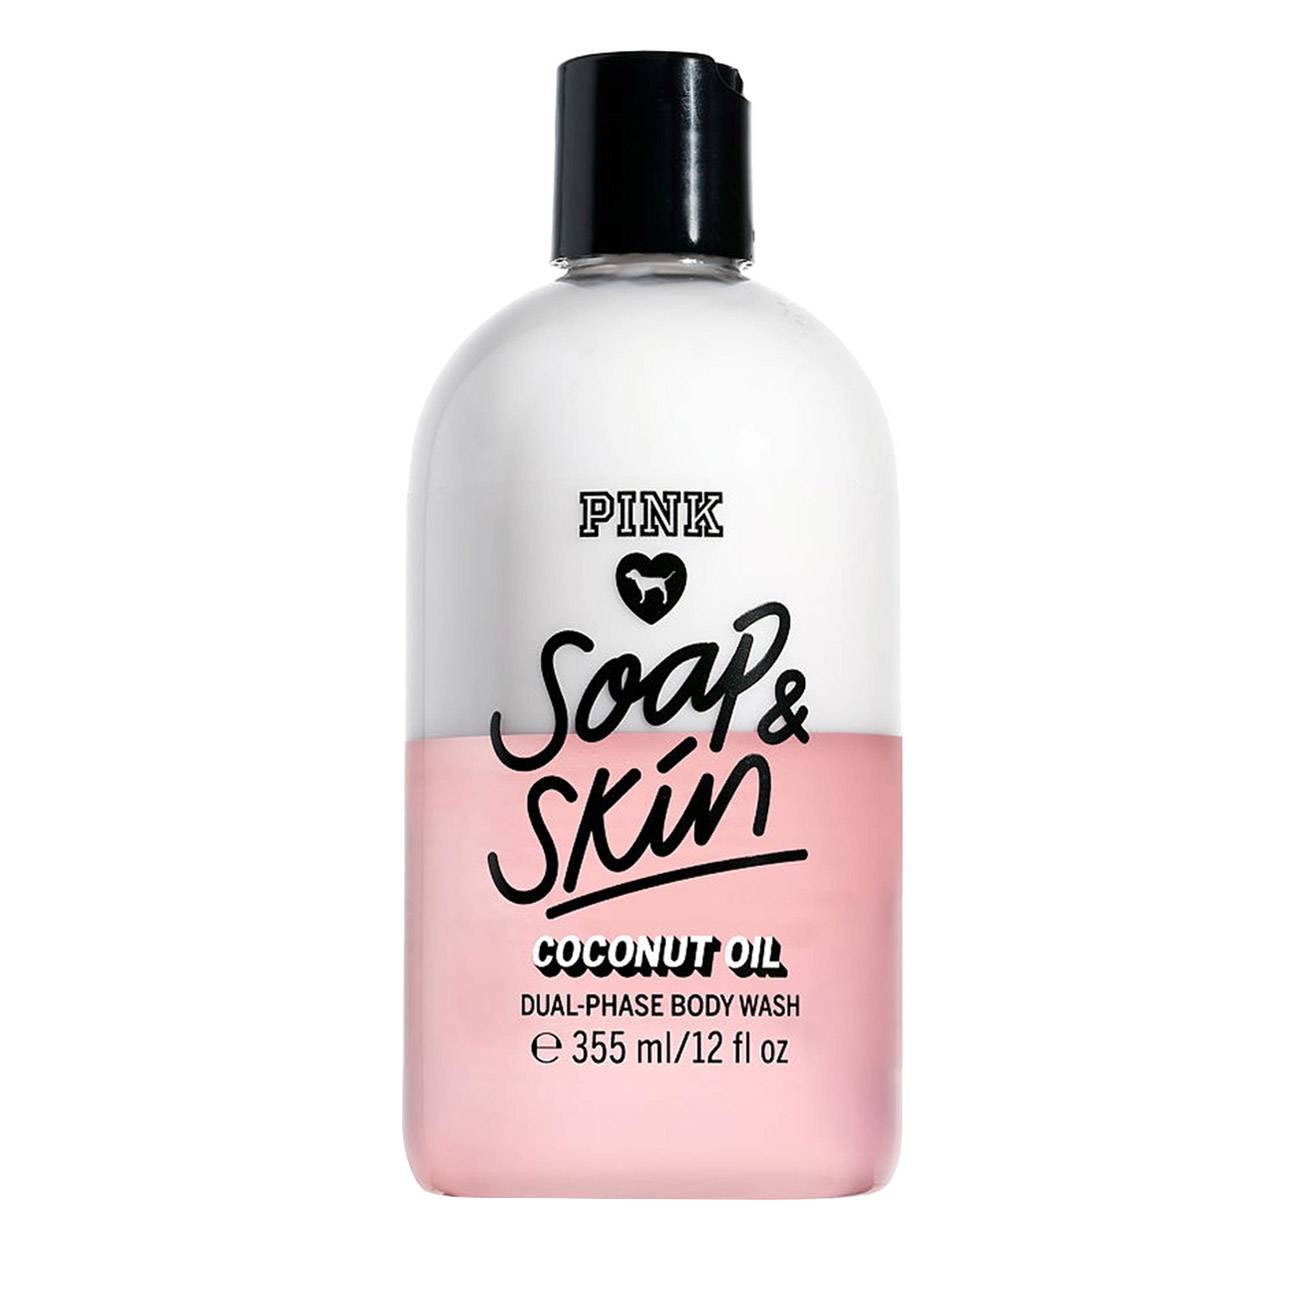 Produs pentru dus si exfoliere Victoria’s Secret PINK SOAP & SKIN COCONUT OIL 355ml cu comanda online